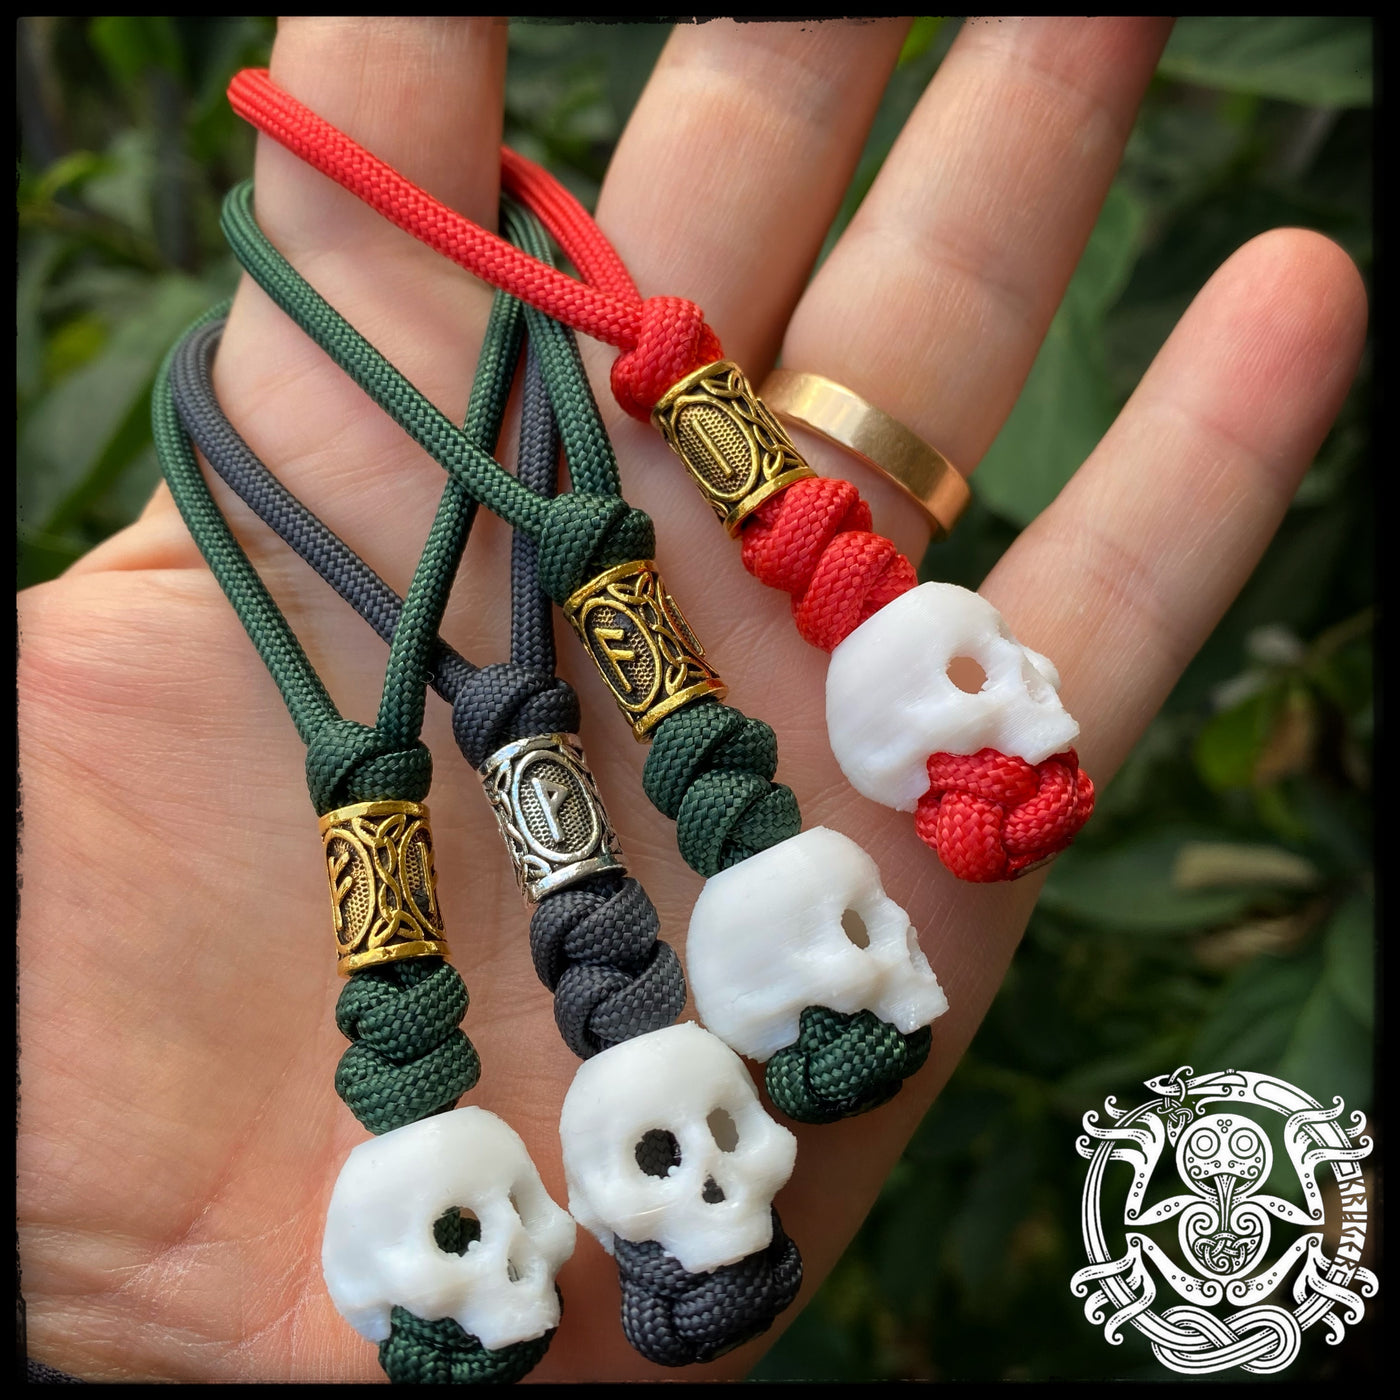 Skull keychain lanyard with rune bead